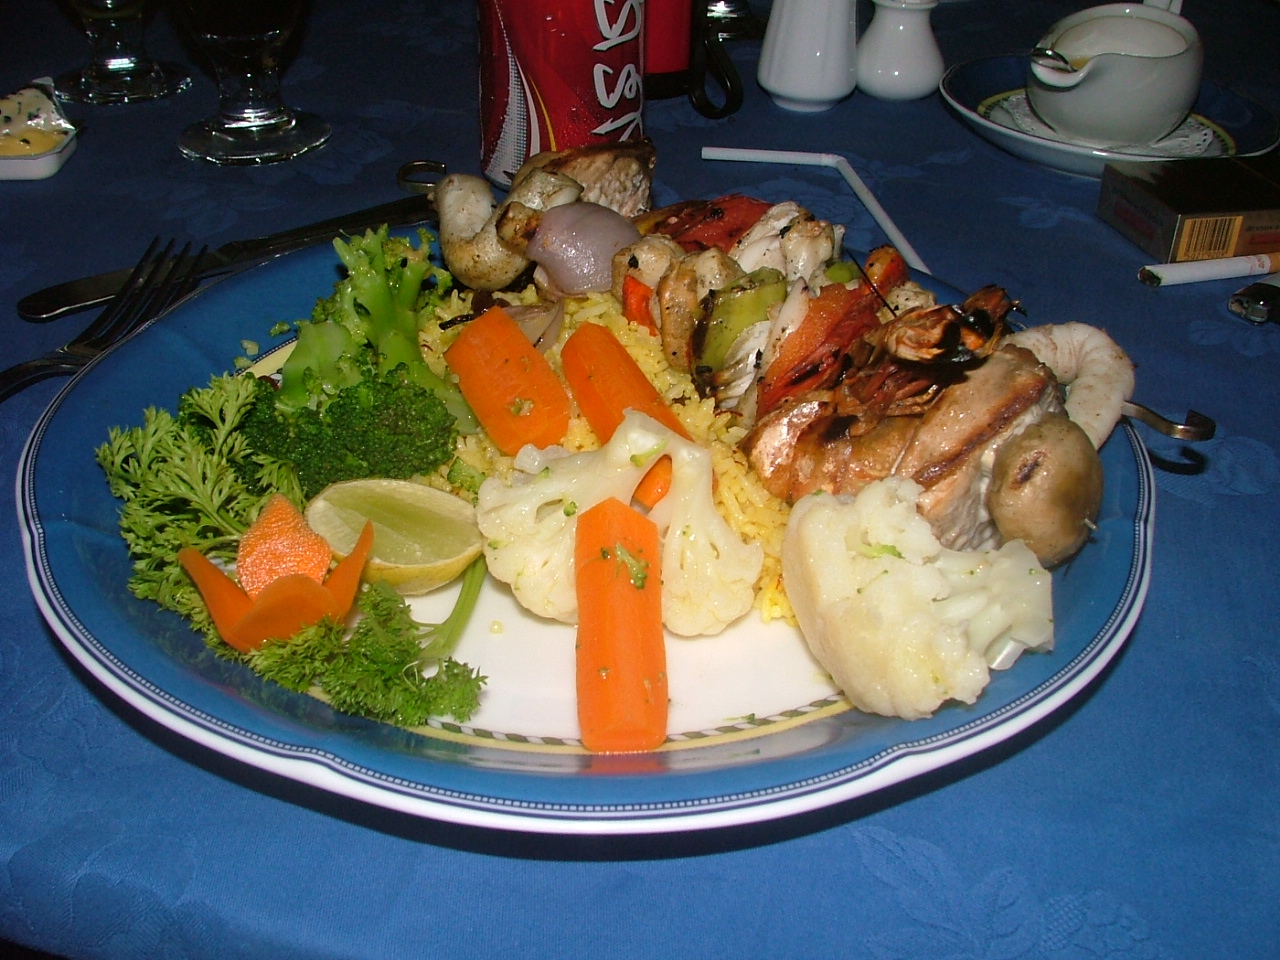 melvin food restaurant plate dinner shrimp shrimps vegetable rice carrots fried food